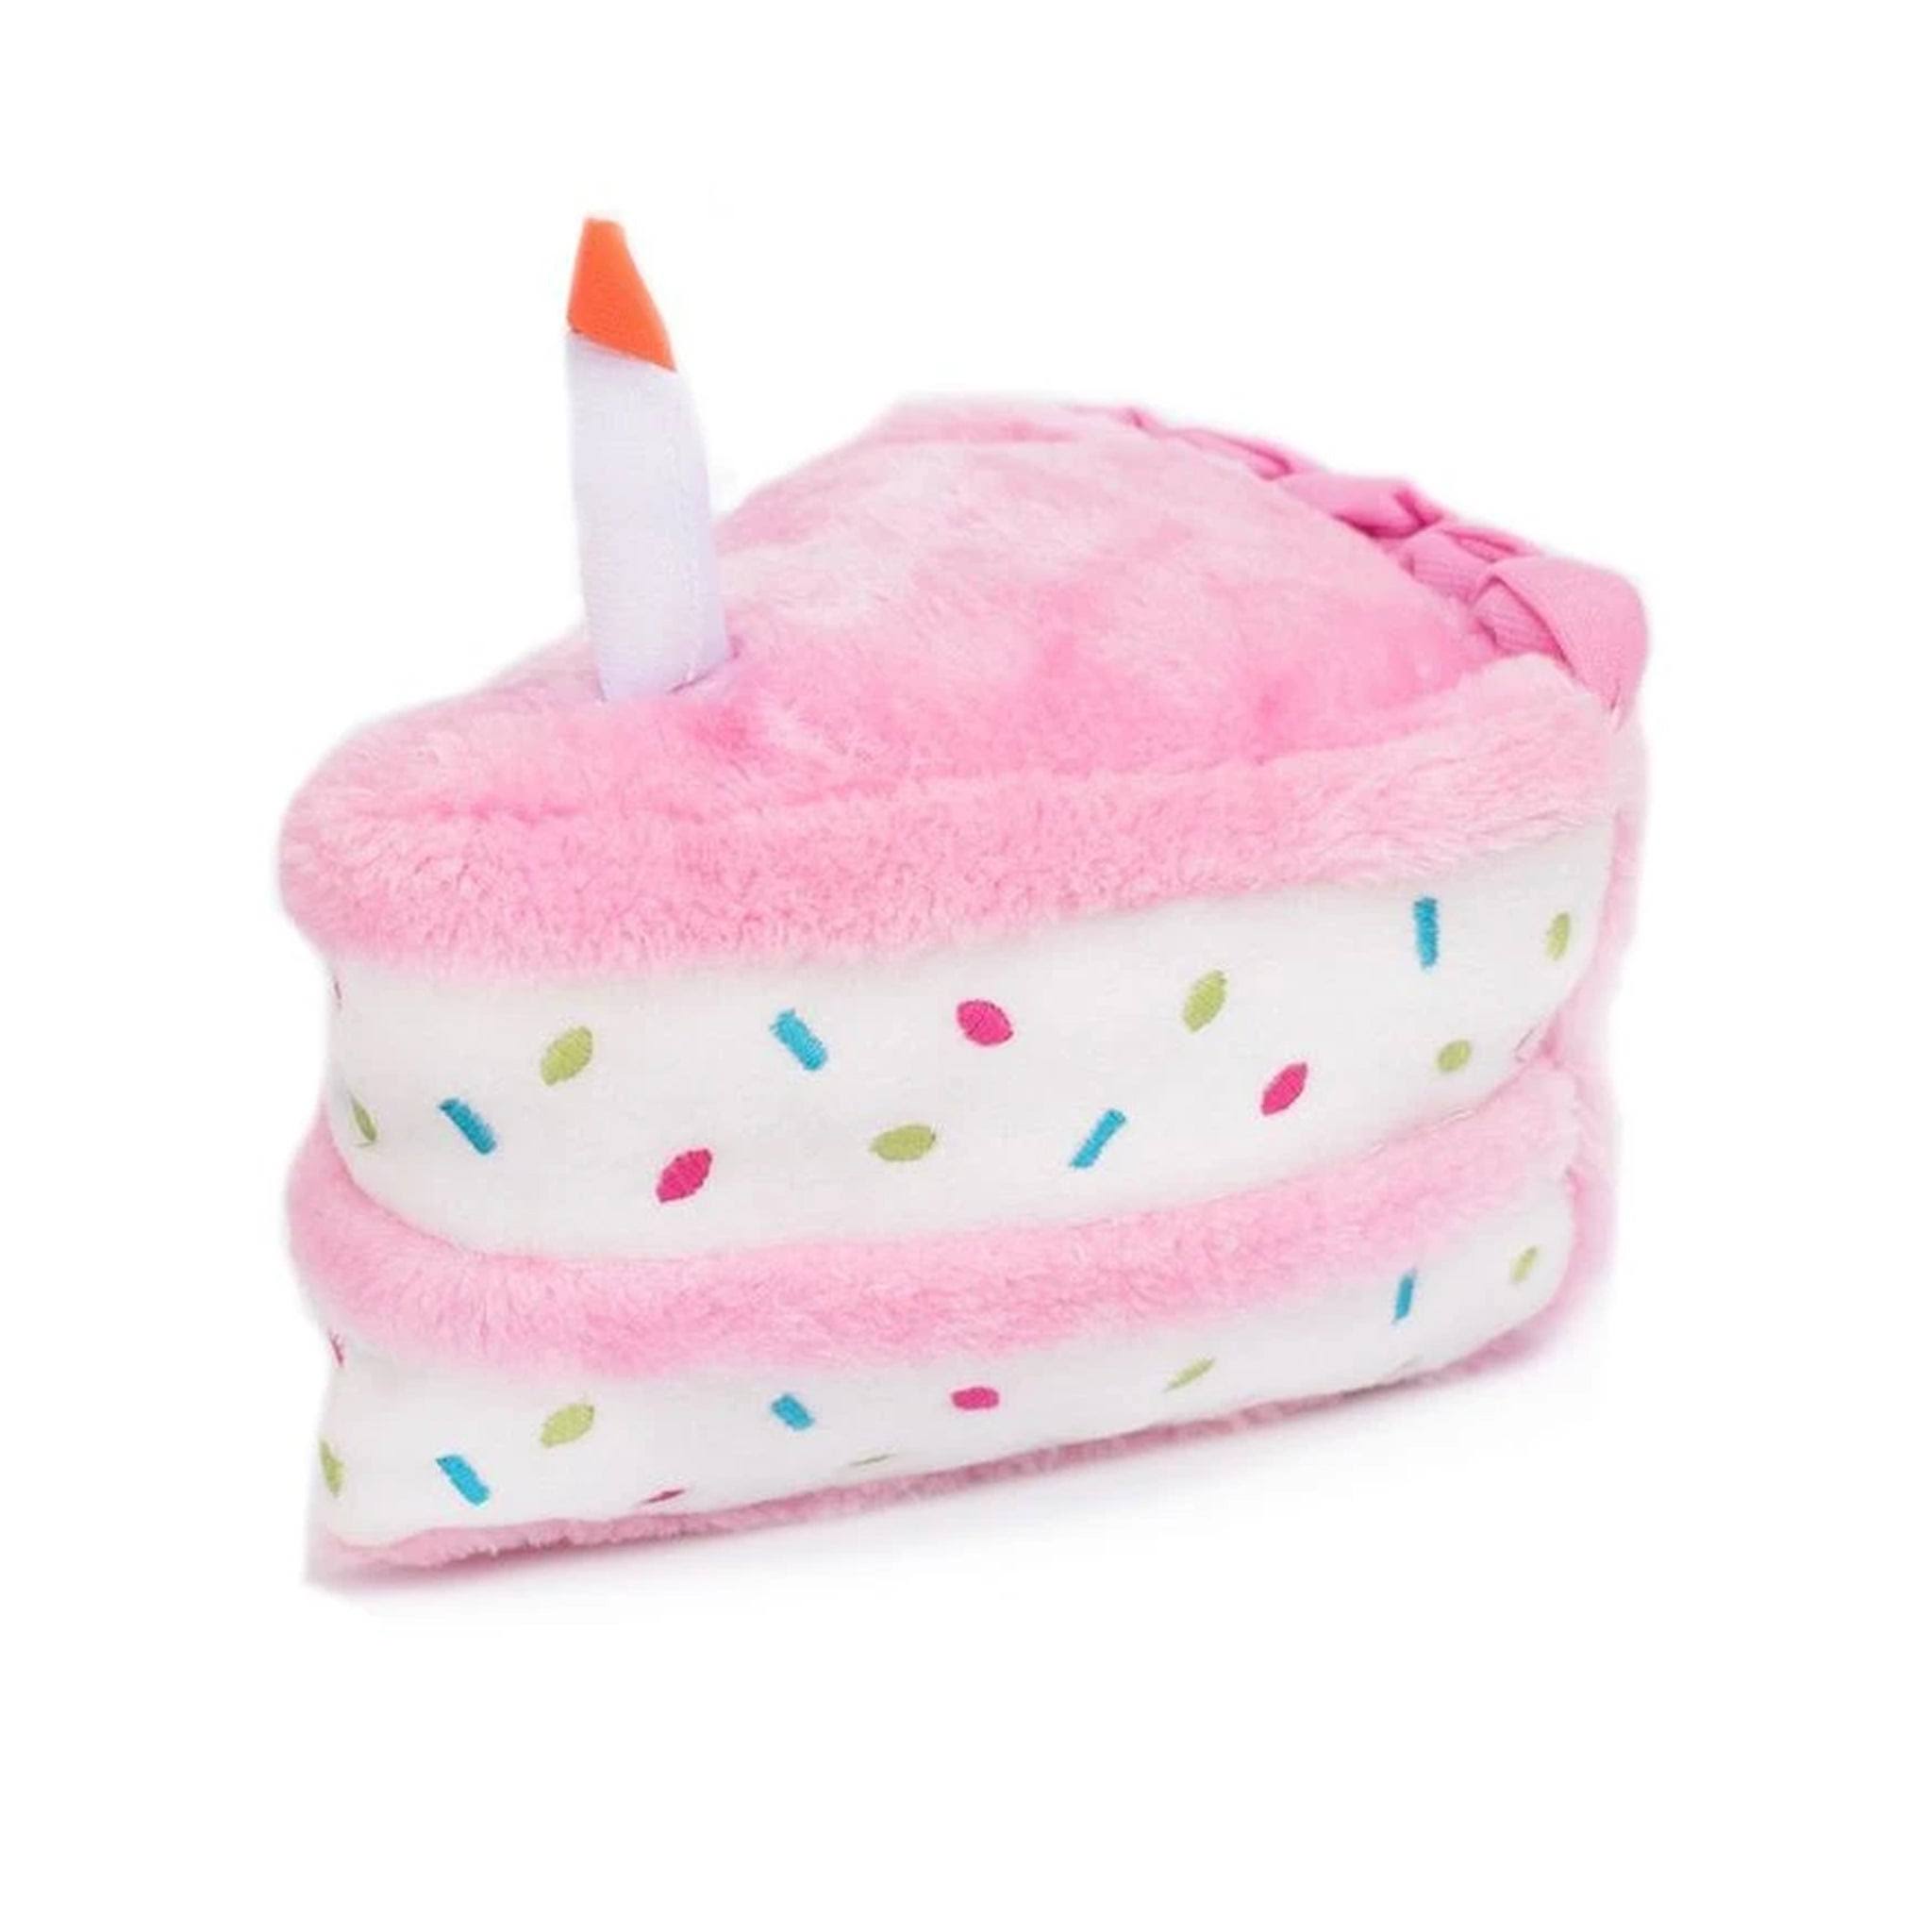 ZippyPaws Birthday Cake Plush Dog Toy - Pink